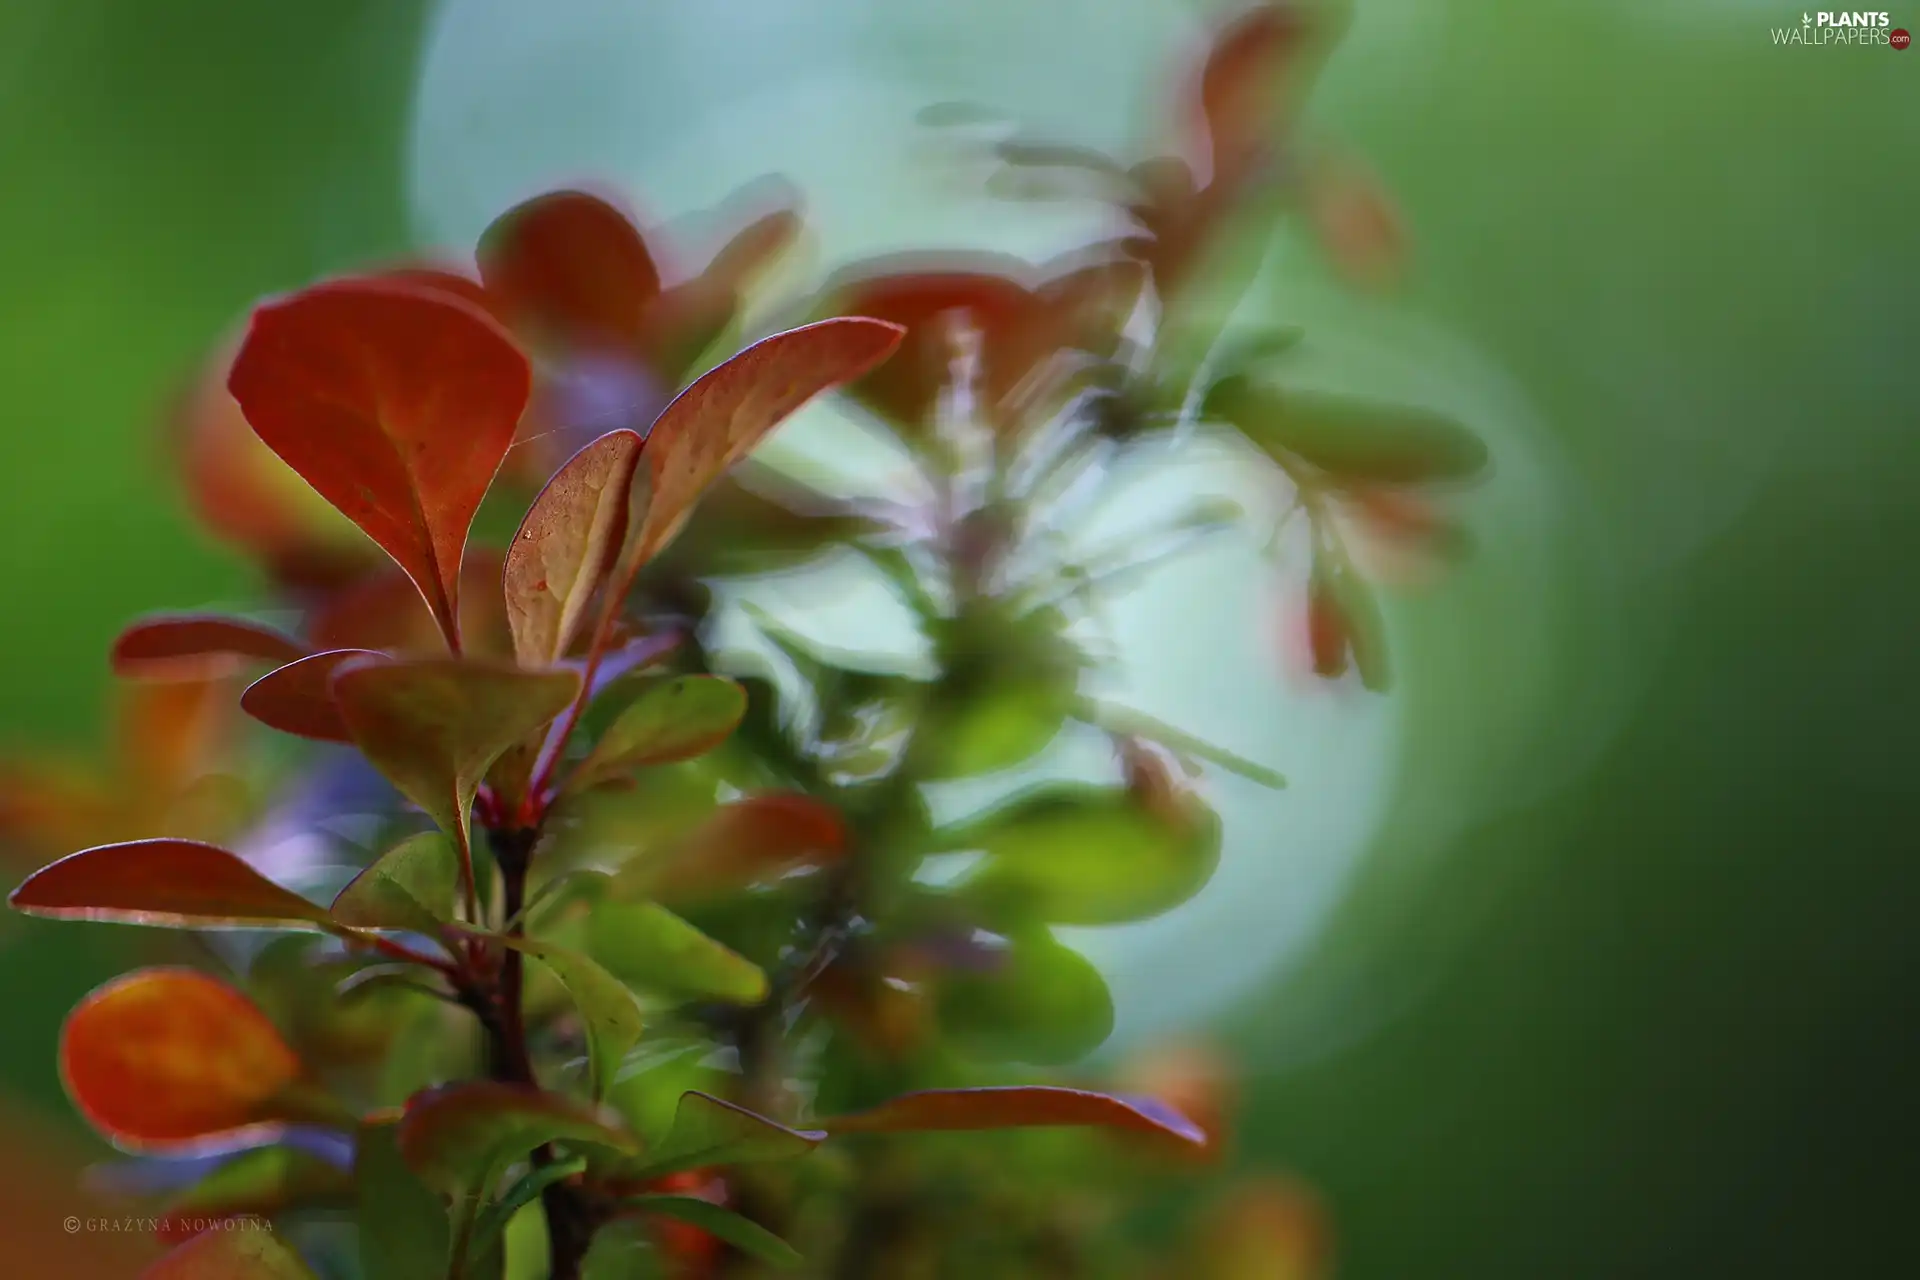 Bush, shadows, color, Leaf, Berberis Thunbergii